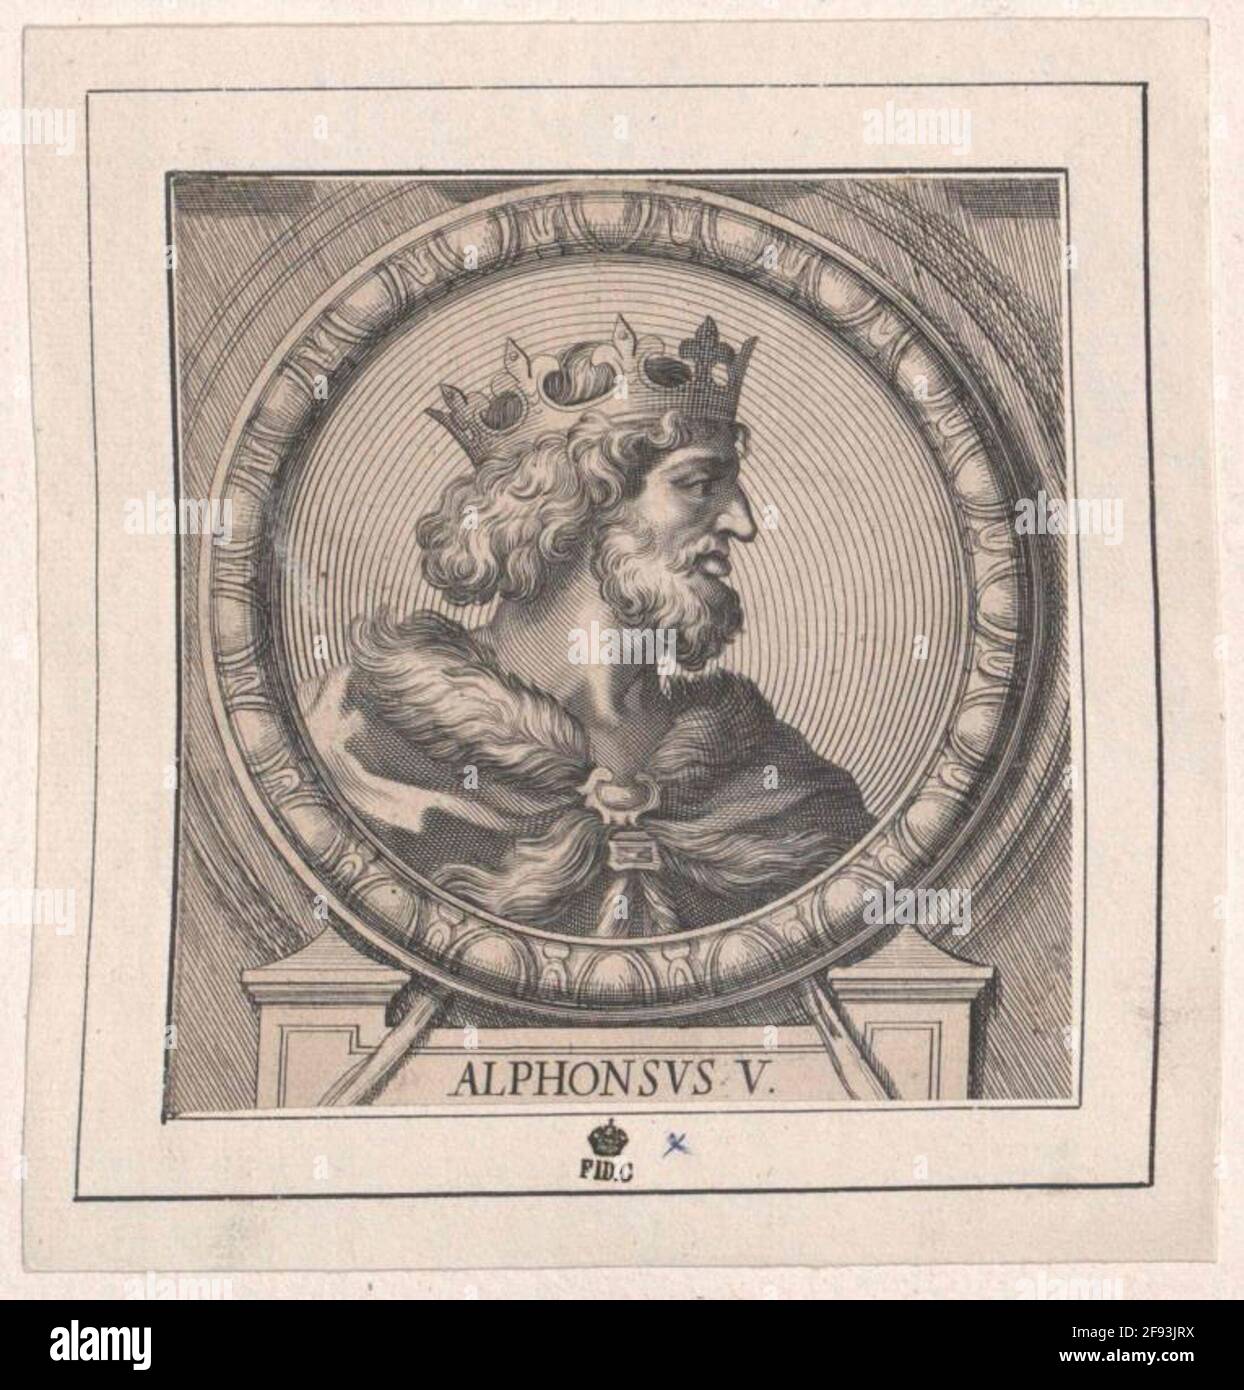 Alfons V., King of León. Stock Photo